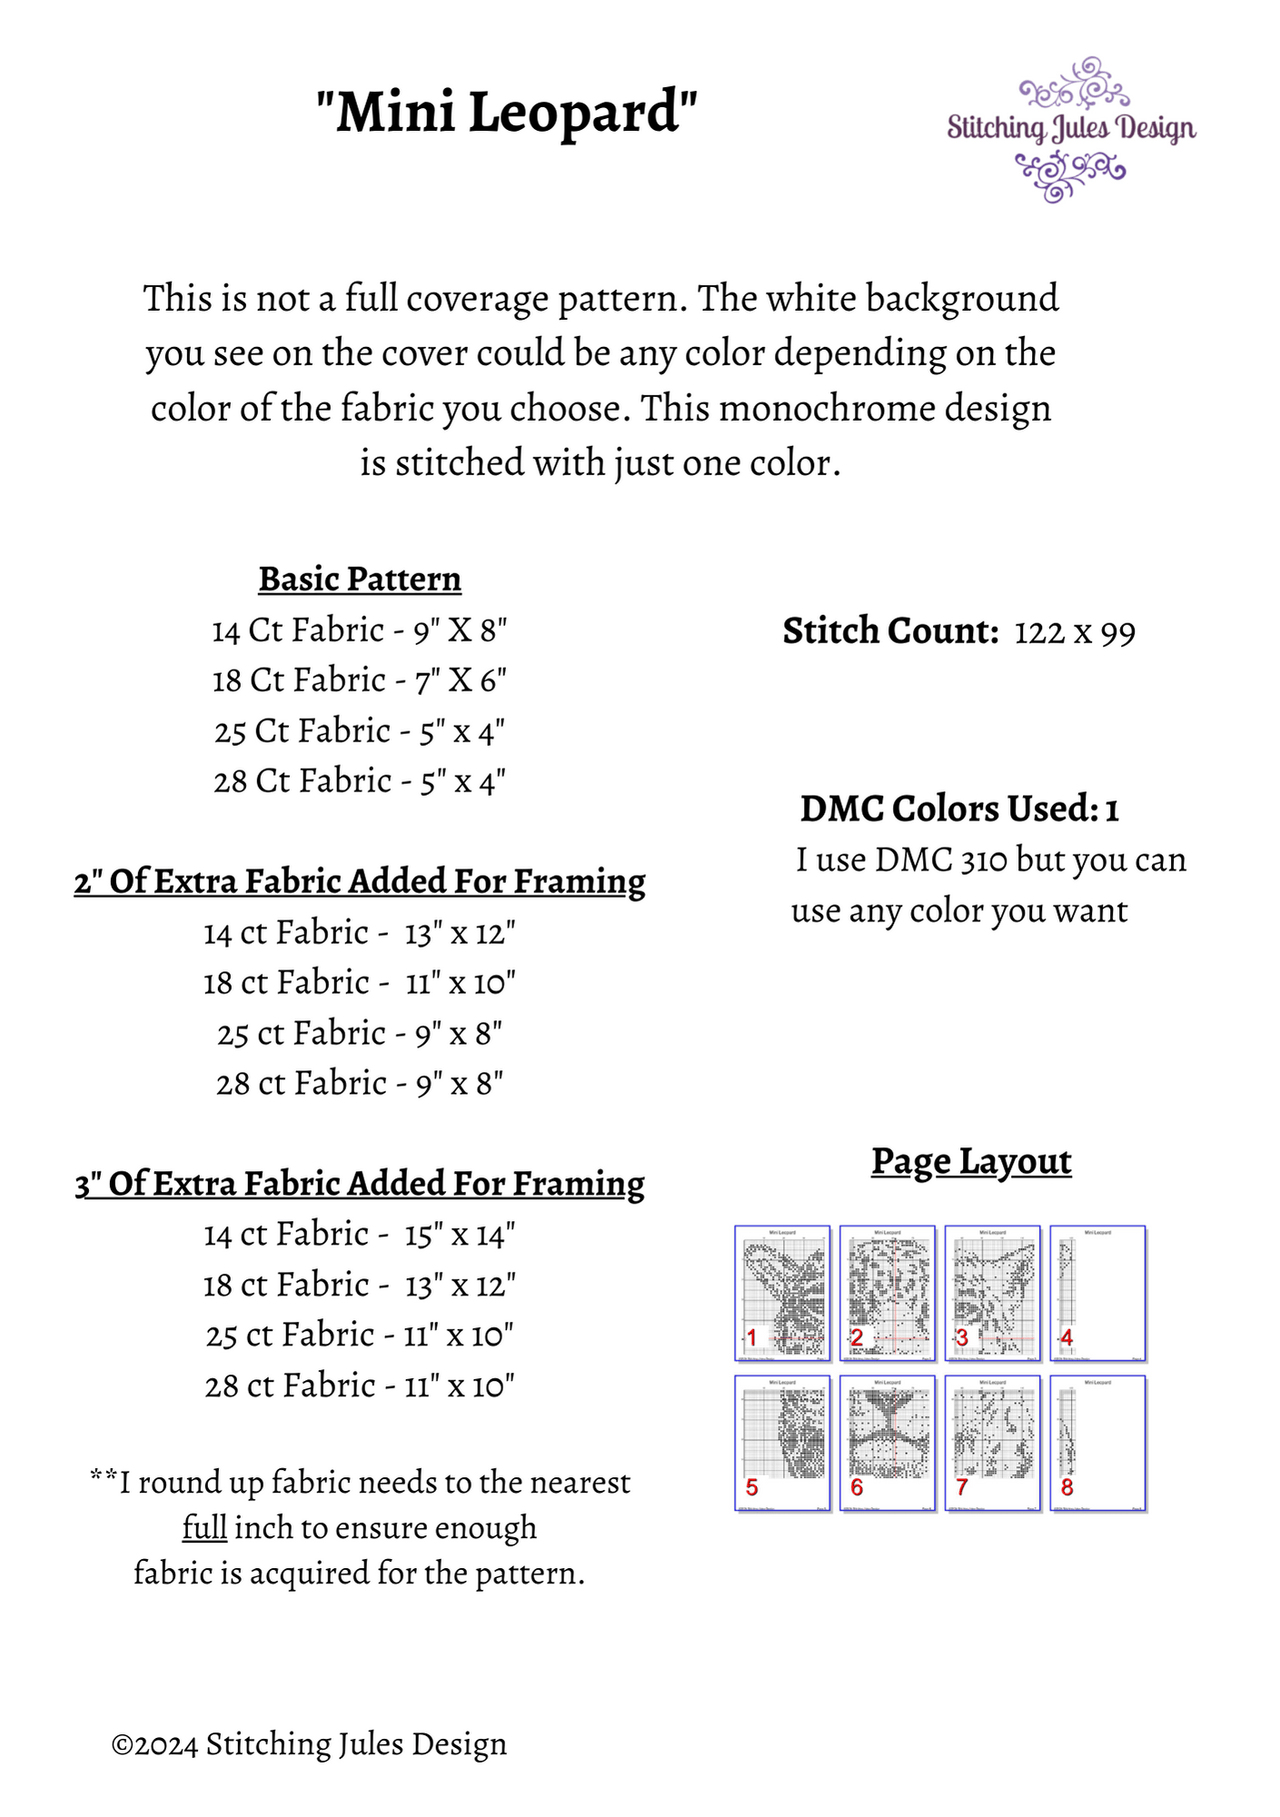 Stitching Jules Design Cross Stitch Pattern Mini Monochrome Leopard Counted Cross-Stitch Pattern | Instant Download PDF